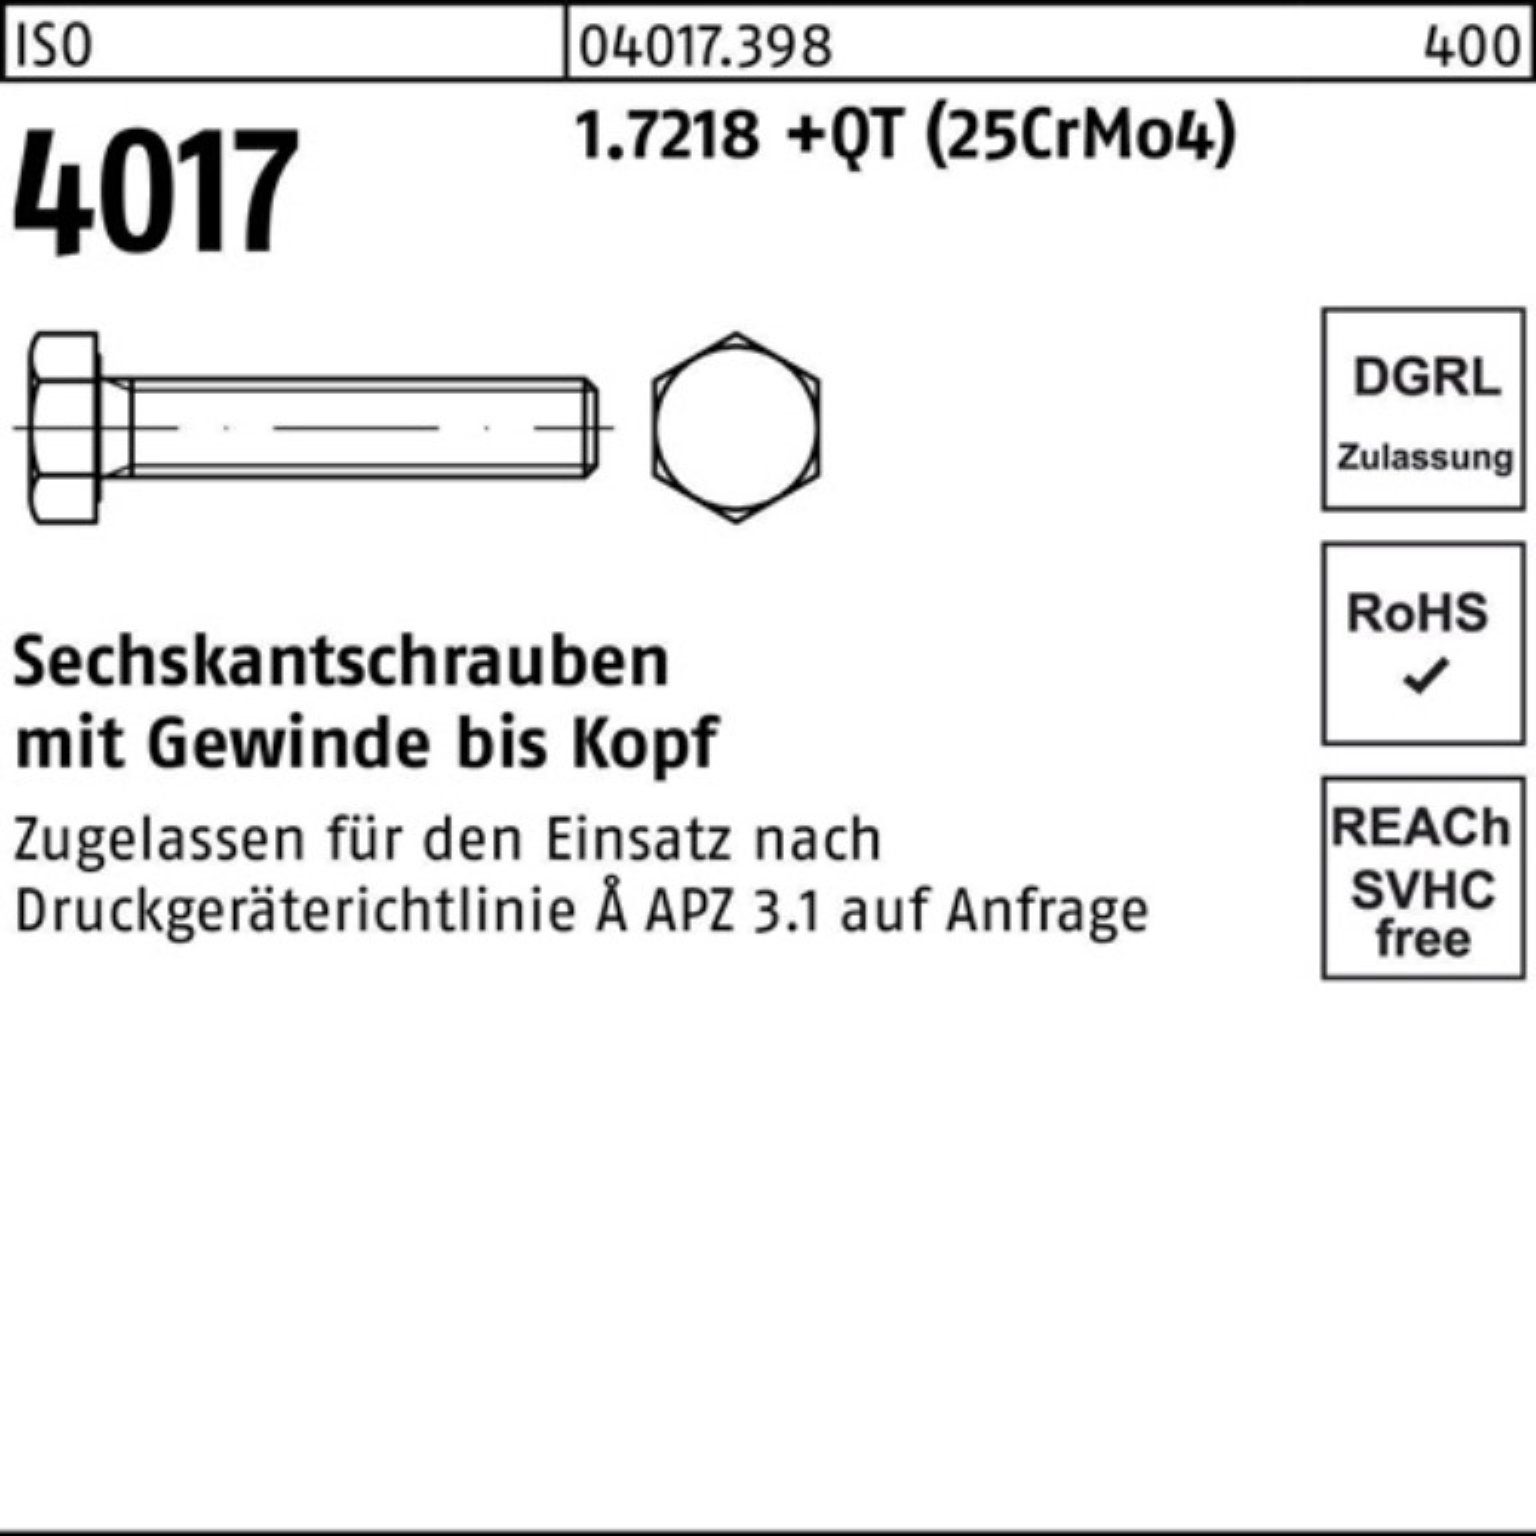 ISO Sechskantschraube +QT Sechskantschraube Pack Bufab (25CrMo4) 4017 100er VG 40 1.7218 M20x